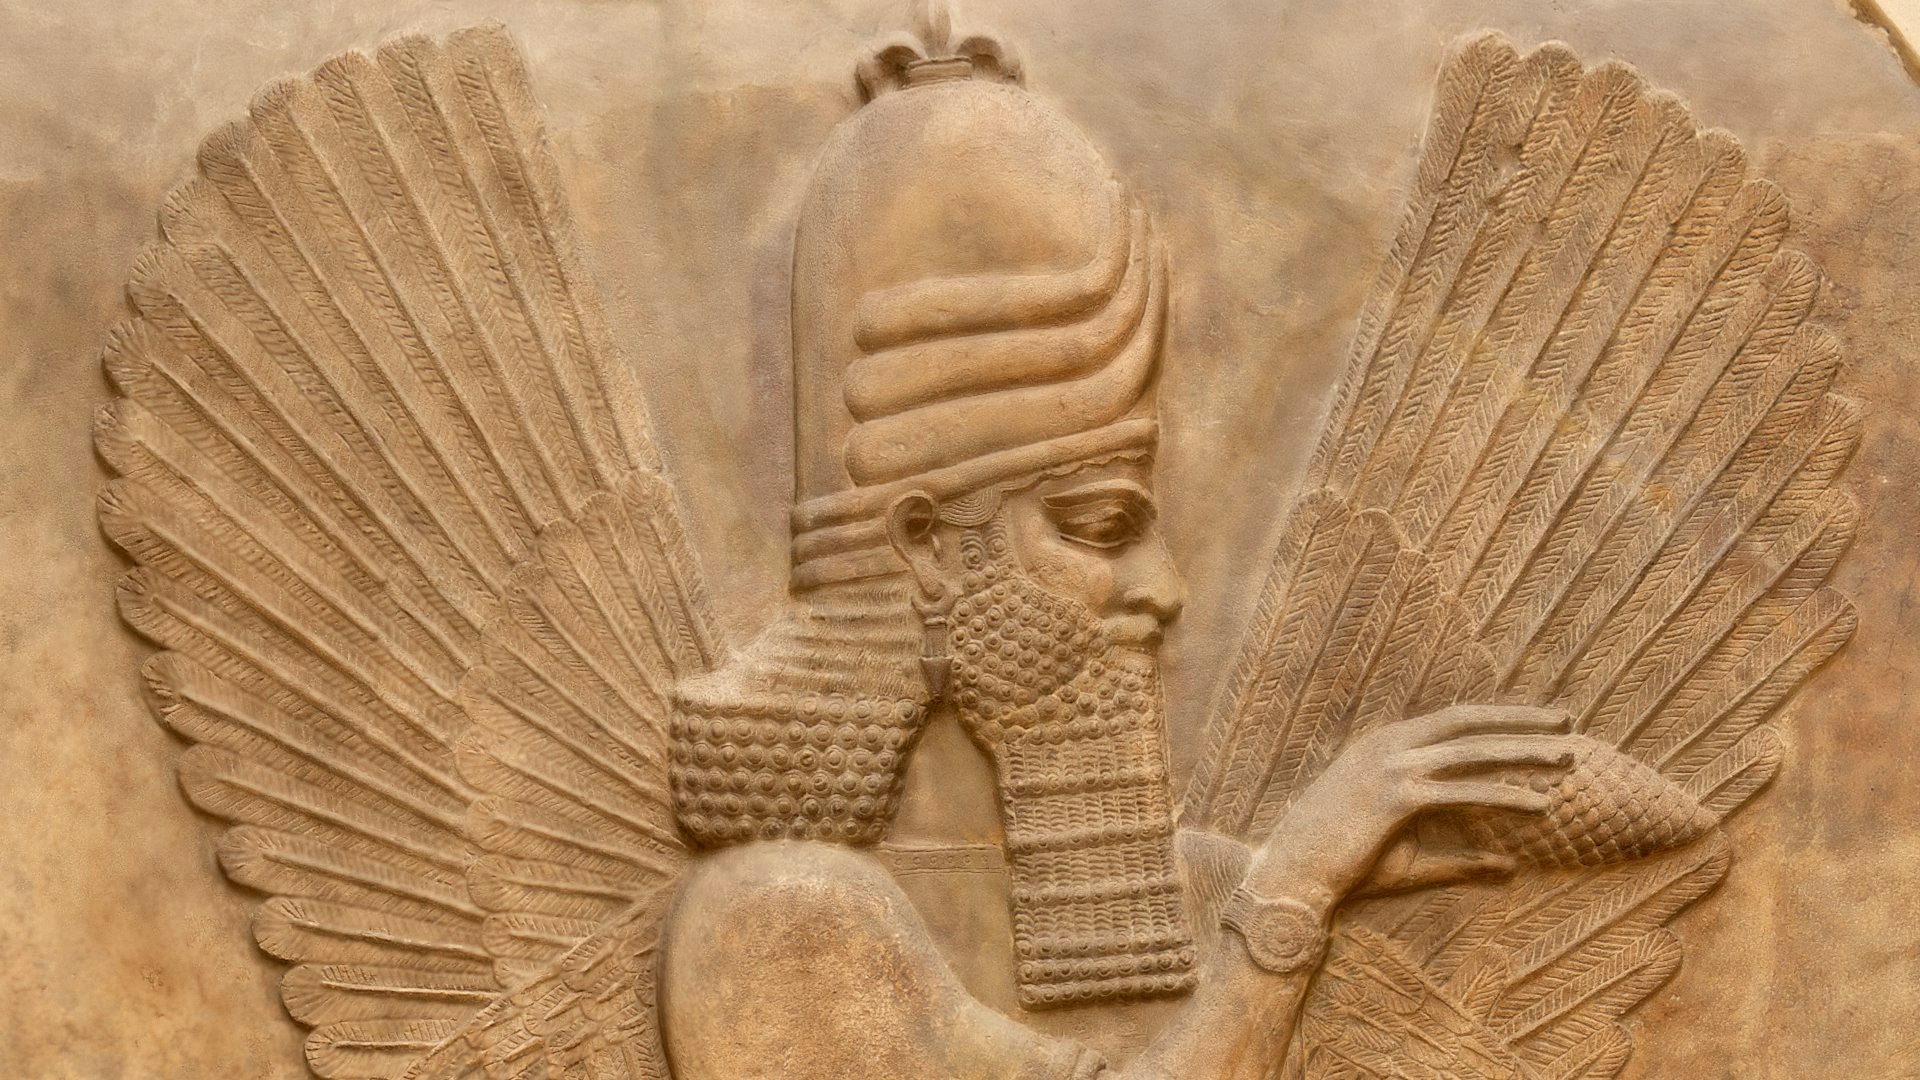 ASSYRIAN STATUE - BLESSING GENIE